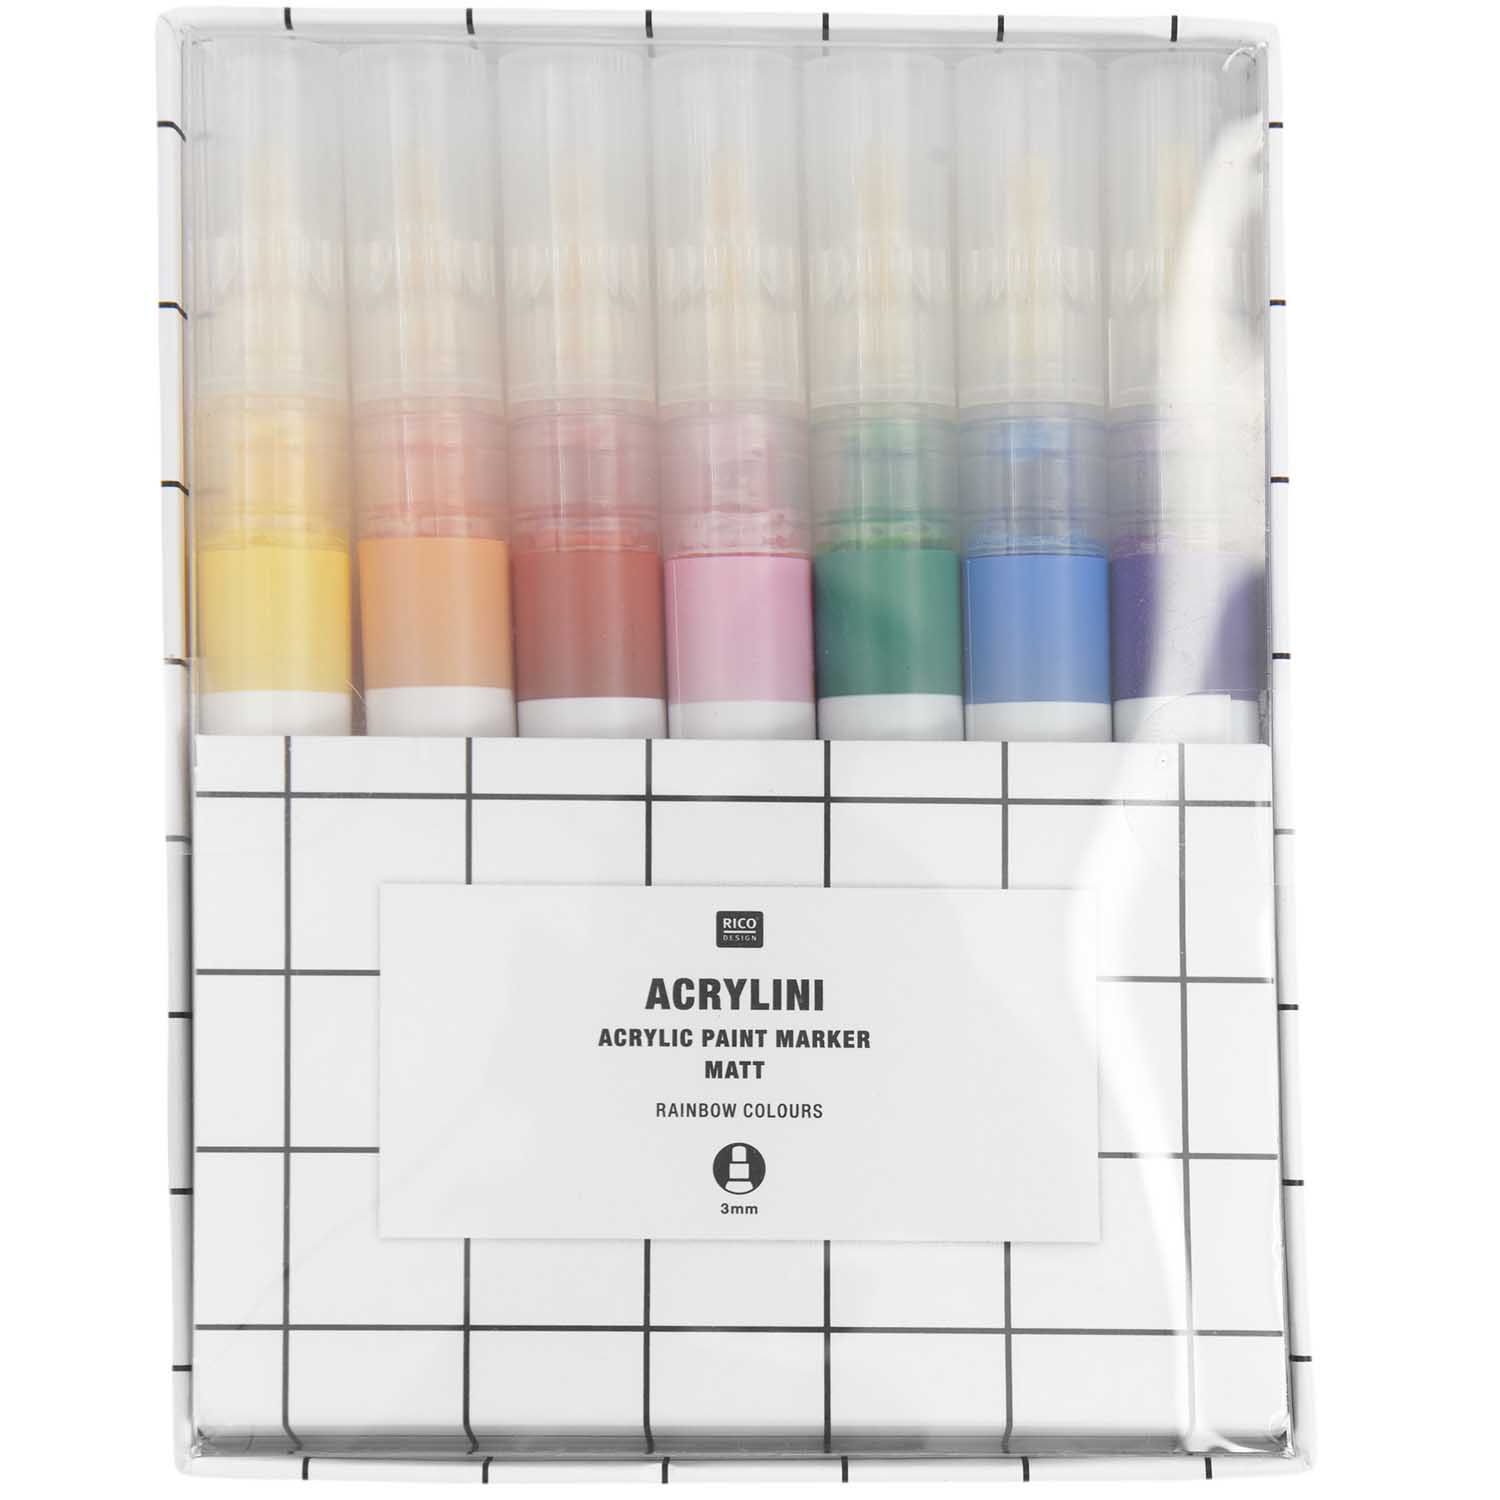 Acrylini Acrylic Painter Marker Matt 3mm Rainbox Colours